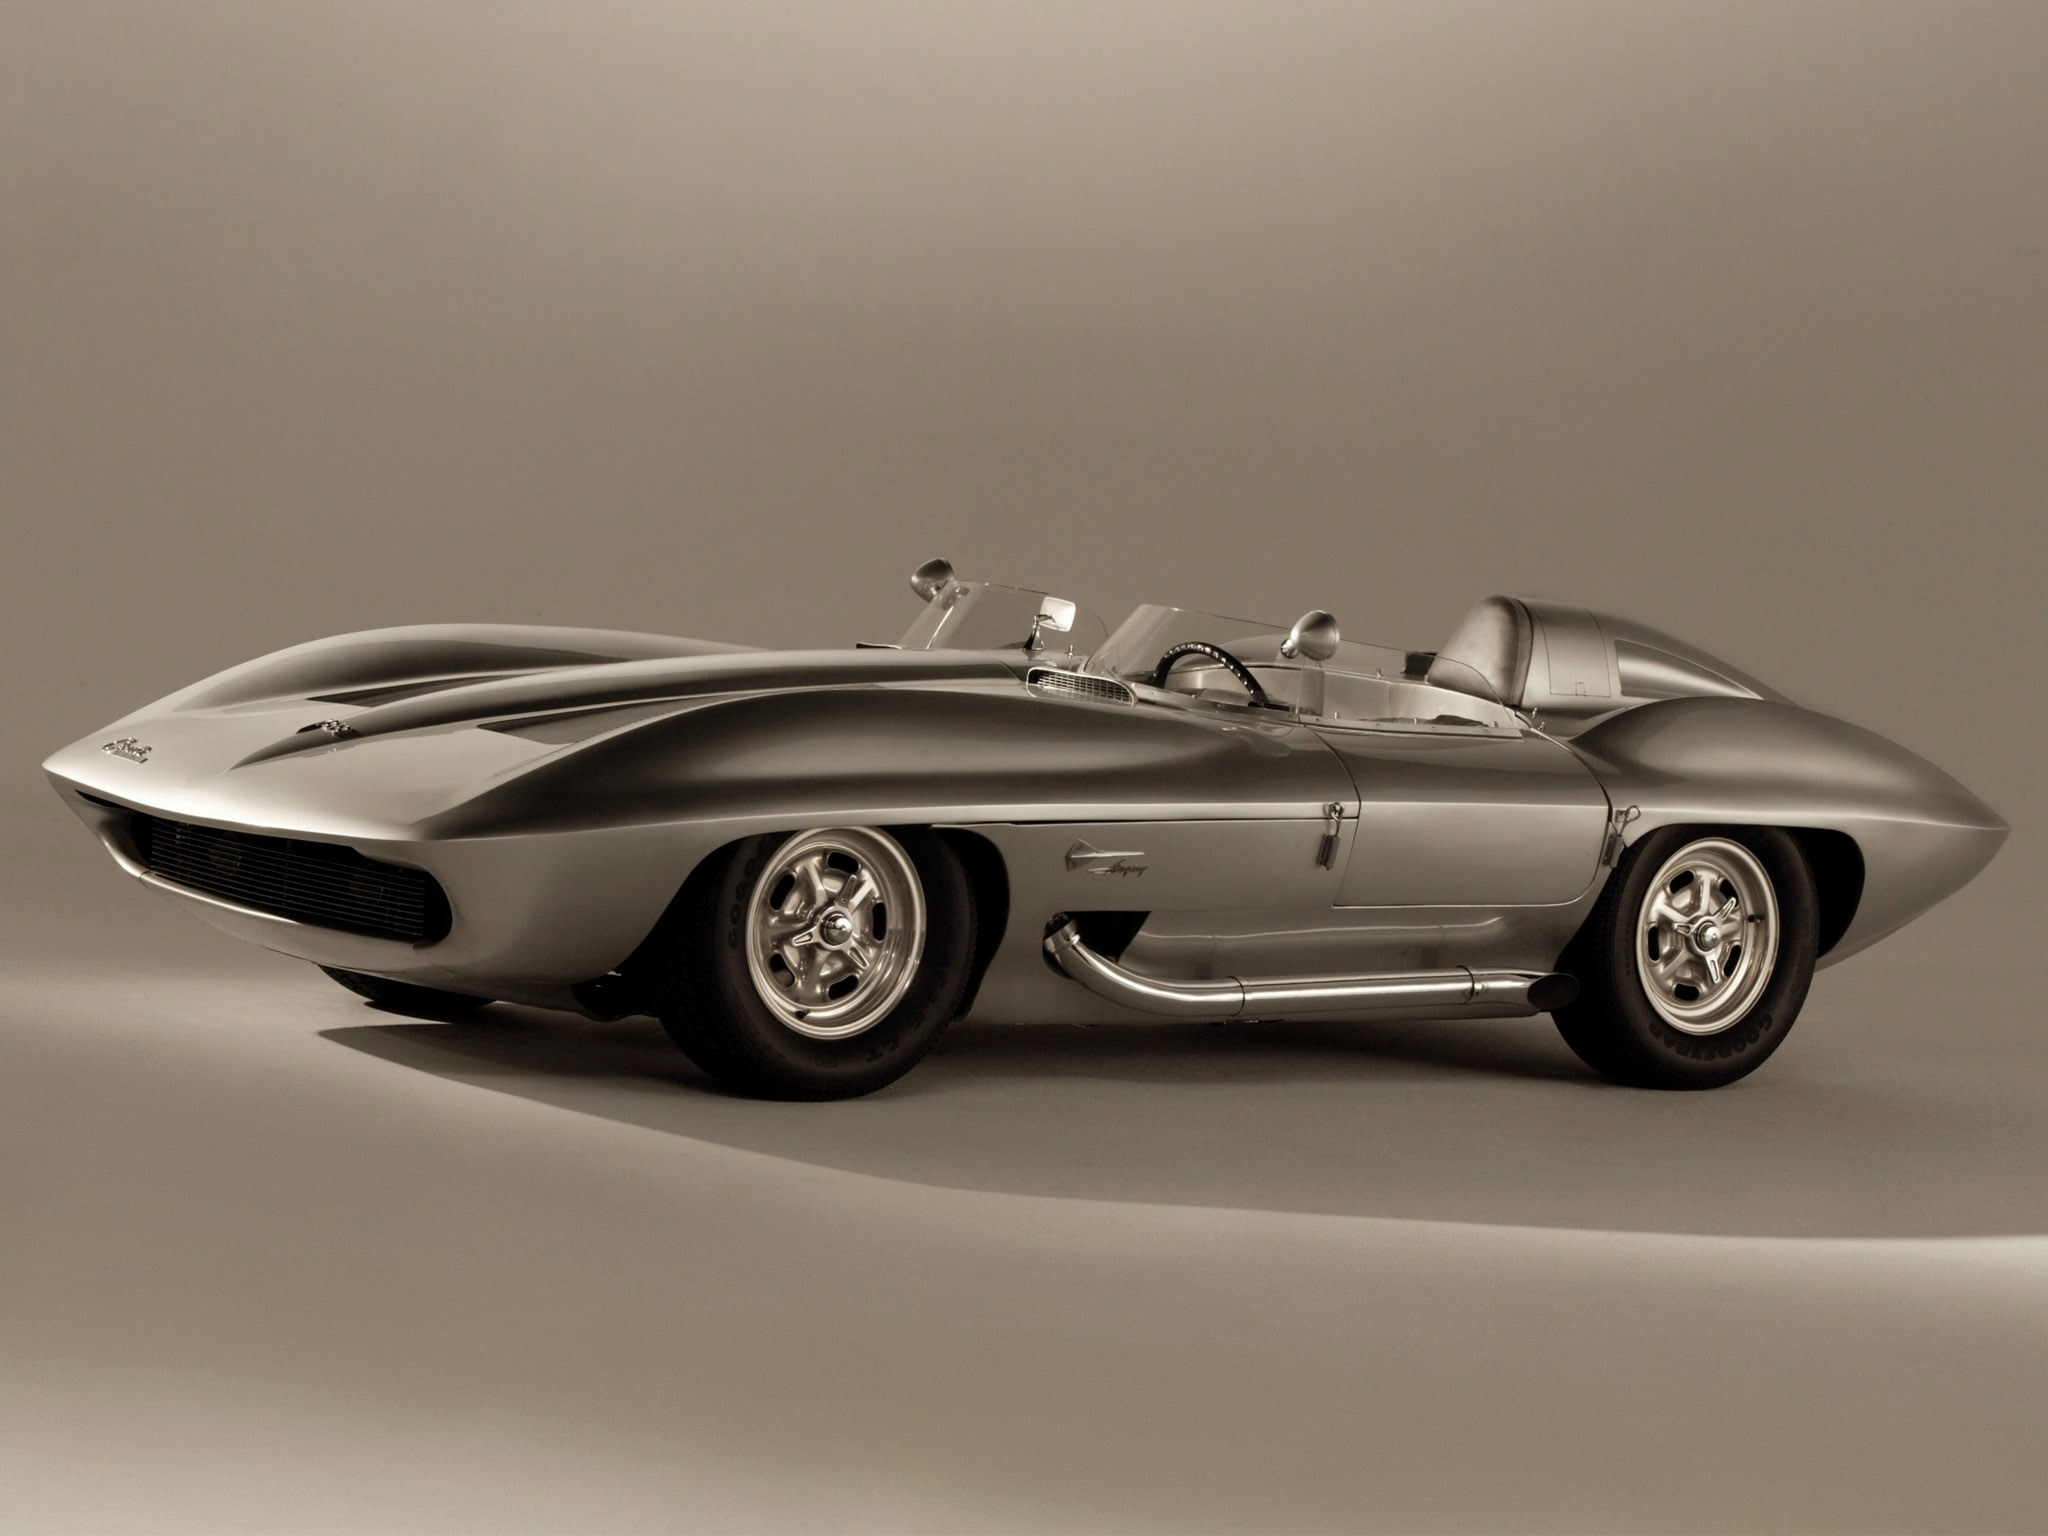 Amazing Chevrolet Corvette Stingray Racer Pictures & Backgrounds